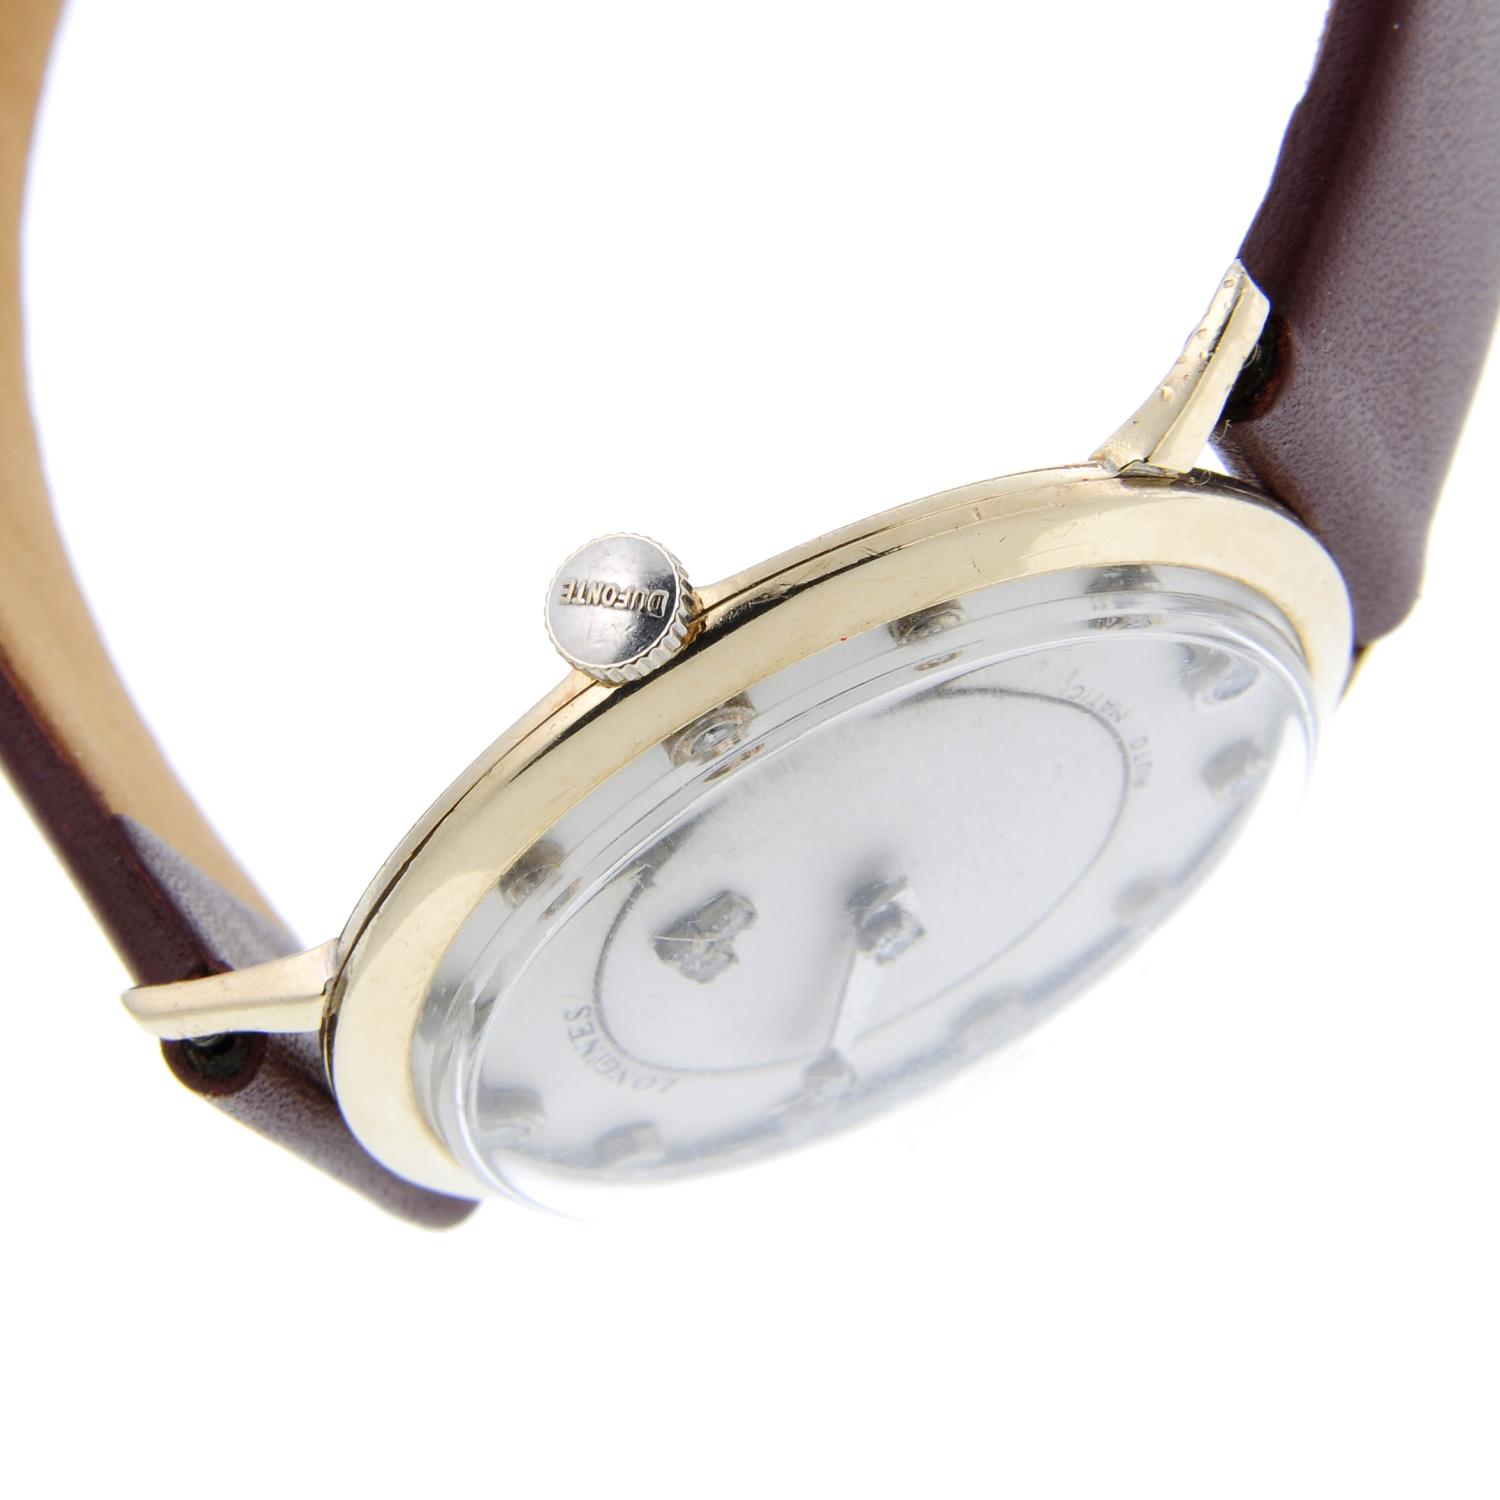 LONGINES - a gentleman's Mystery wrist watch. - Image 3 of 4